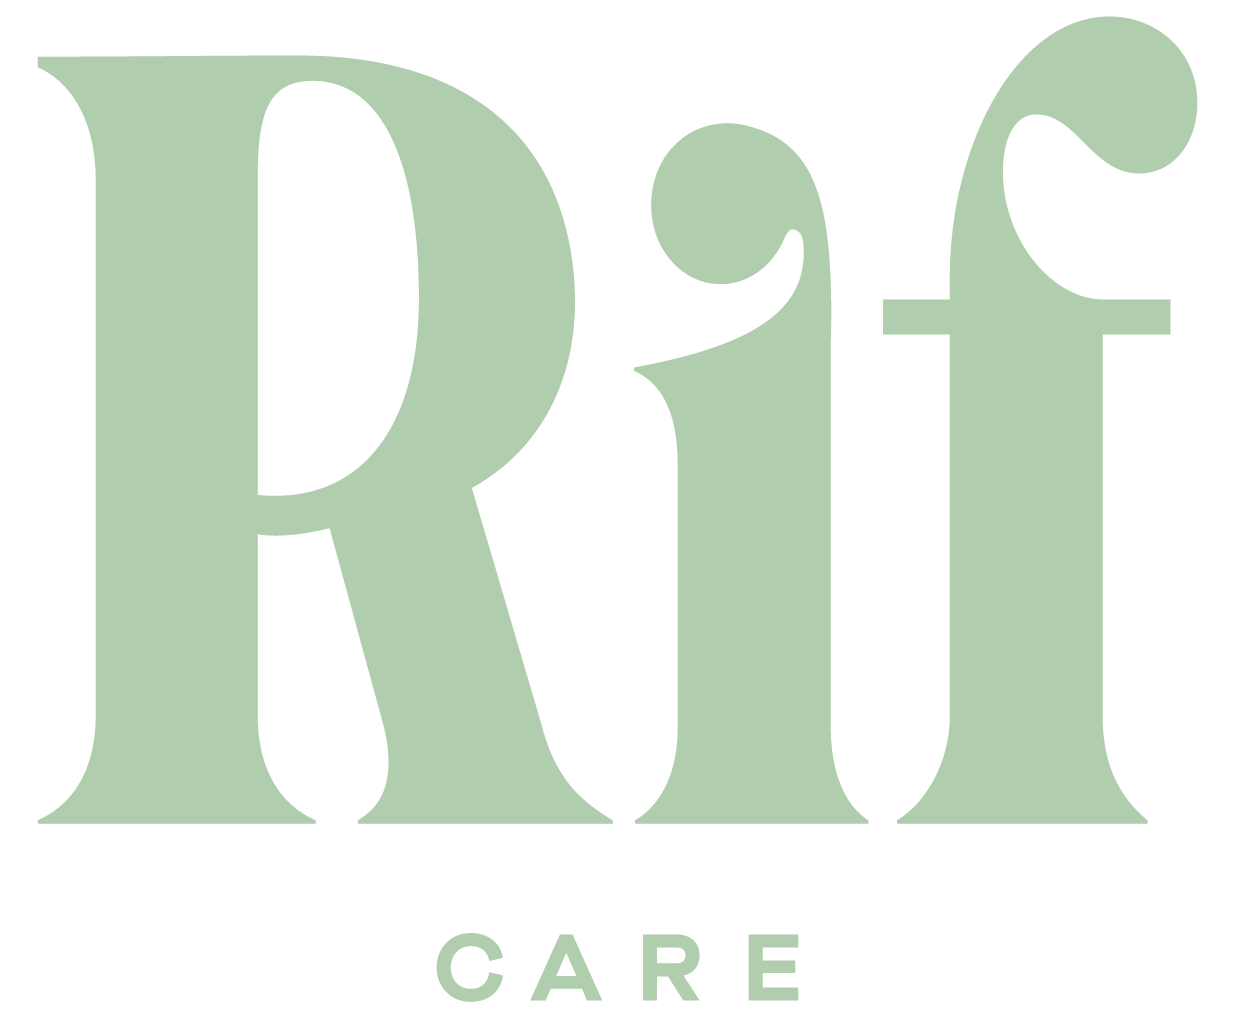 Rif Care Organic Super Absorbency Pad Set